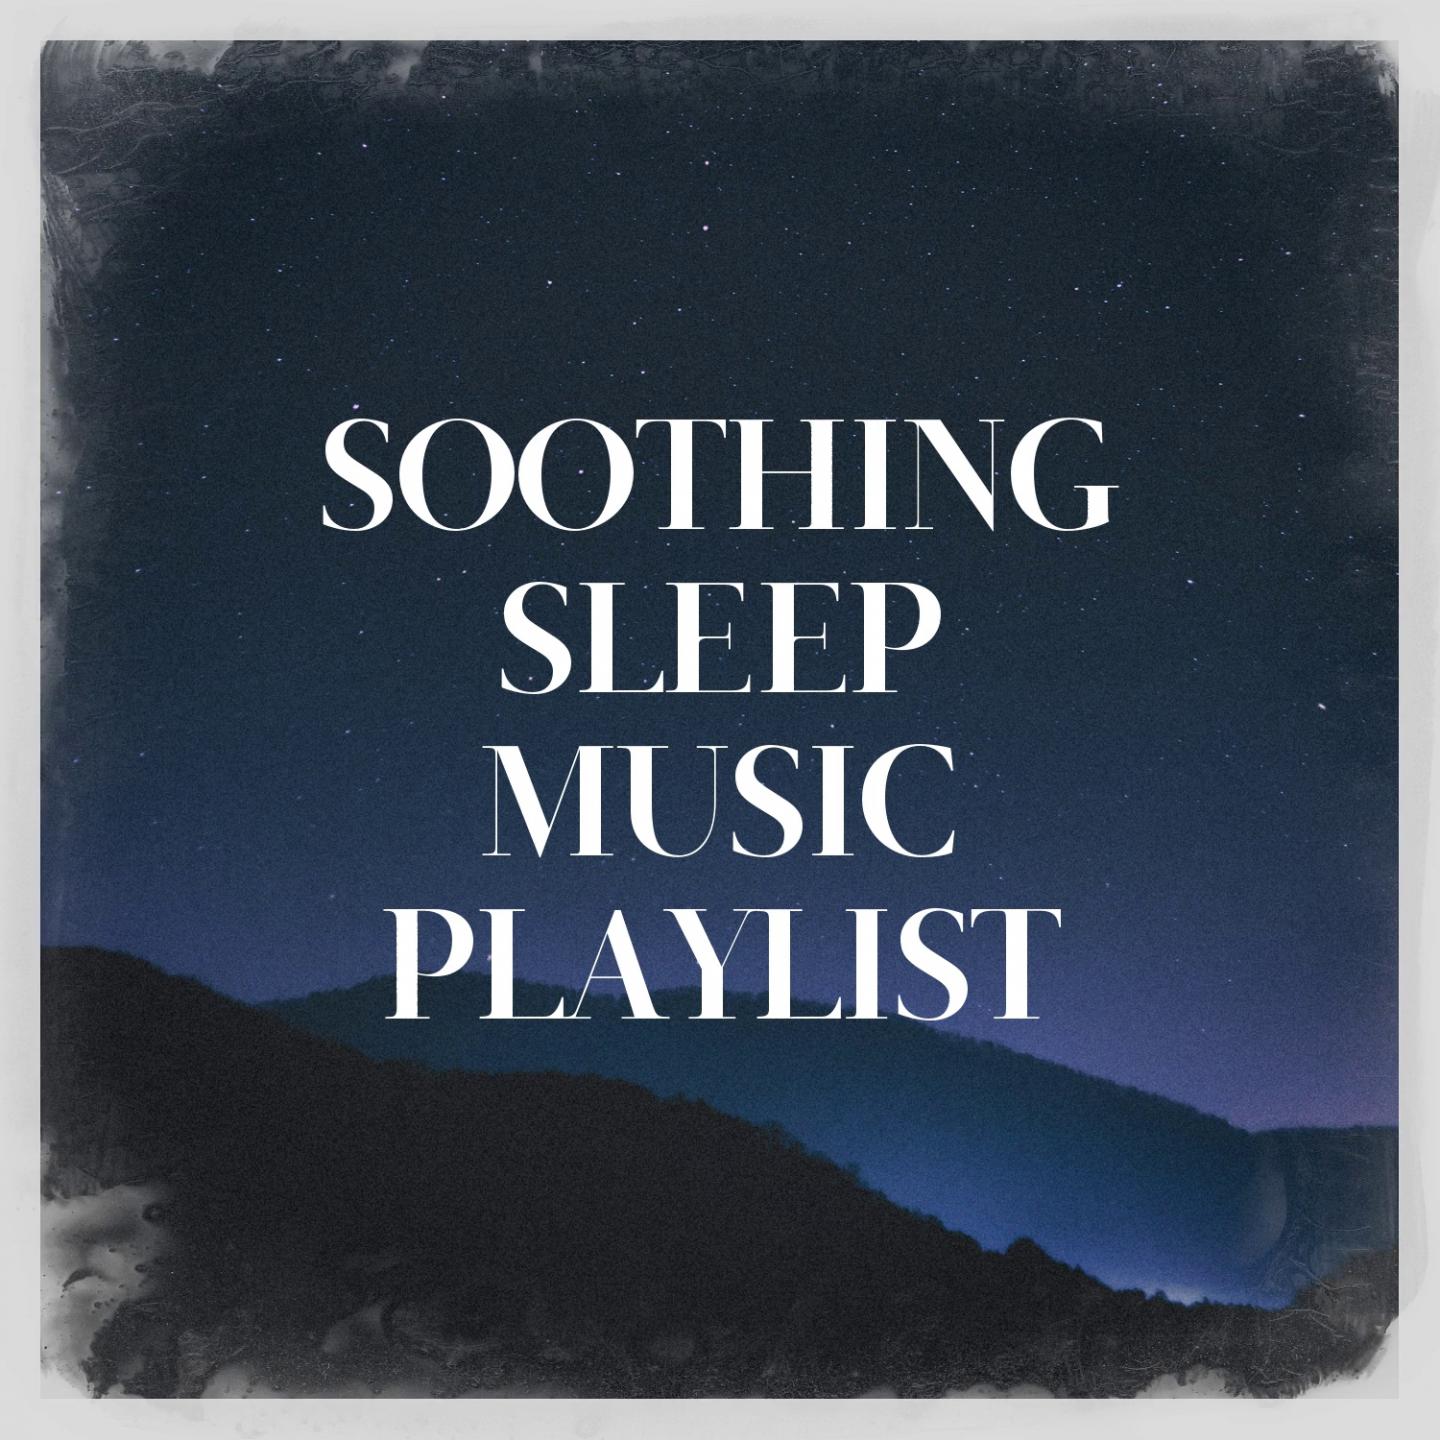 Soothing sleep music playlist